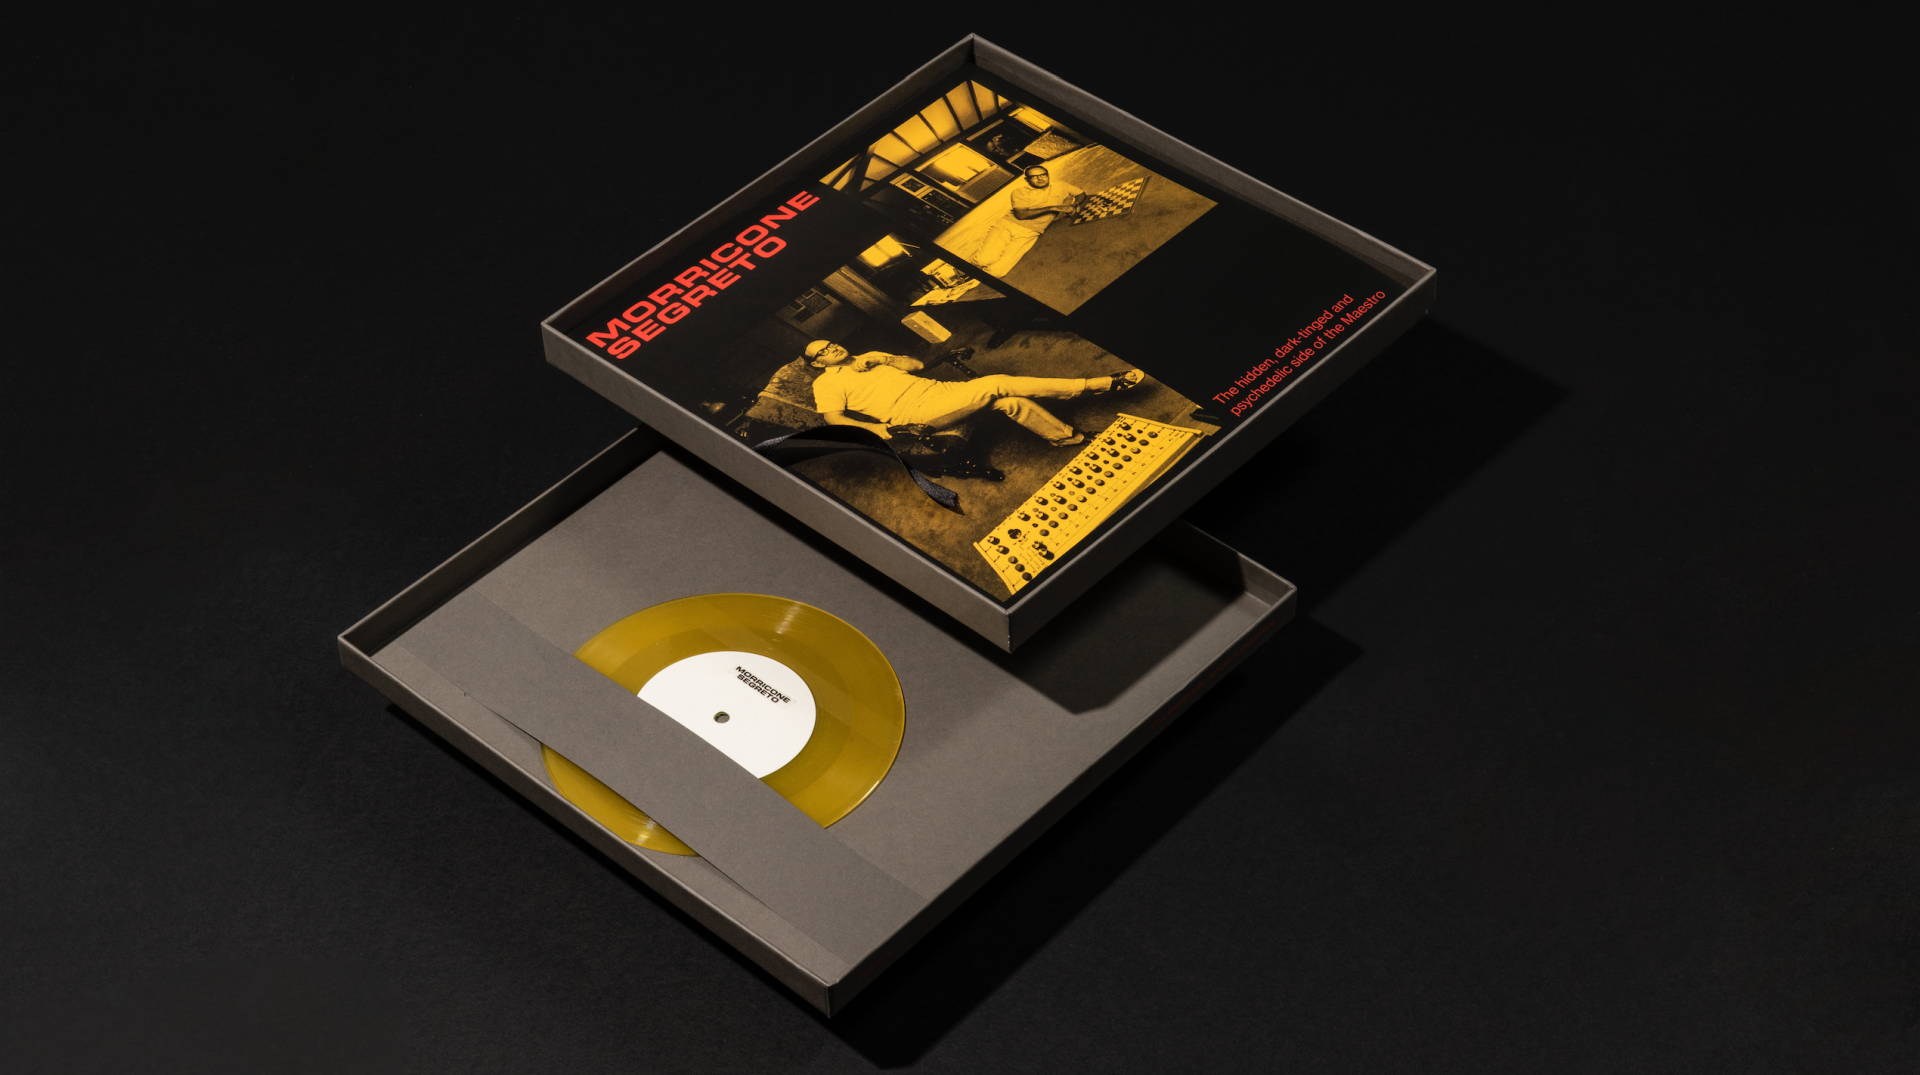 Morricone Segreto, Double LP, CD, Collectors Edition. Photography by Luciano Viti’s Archive